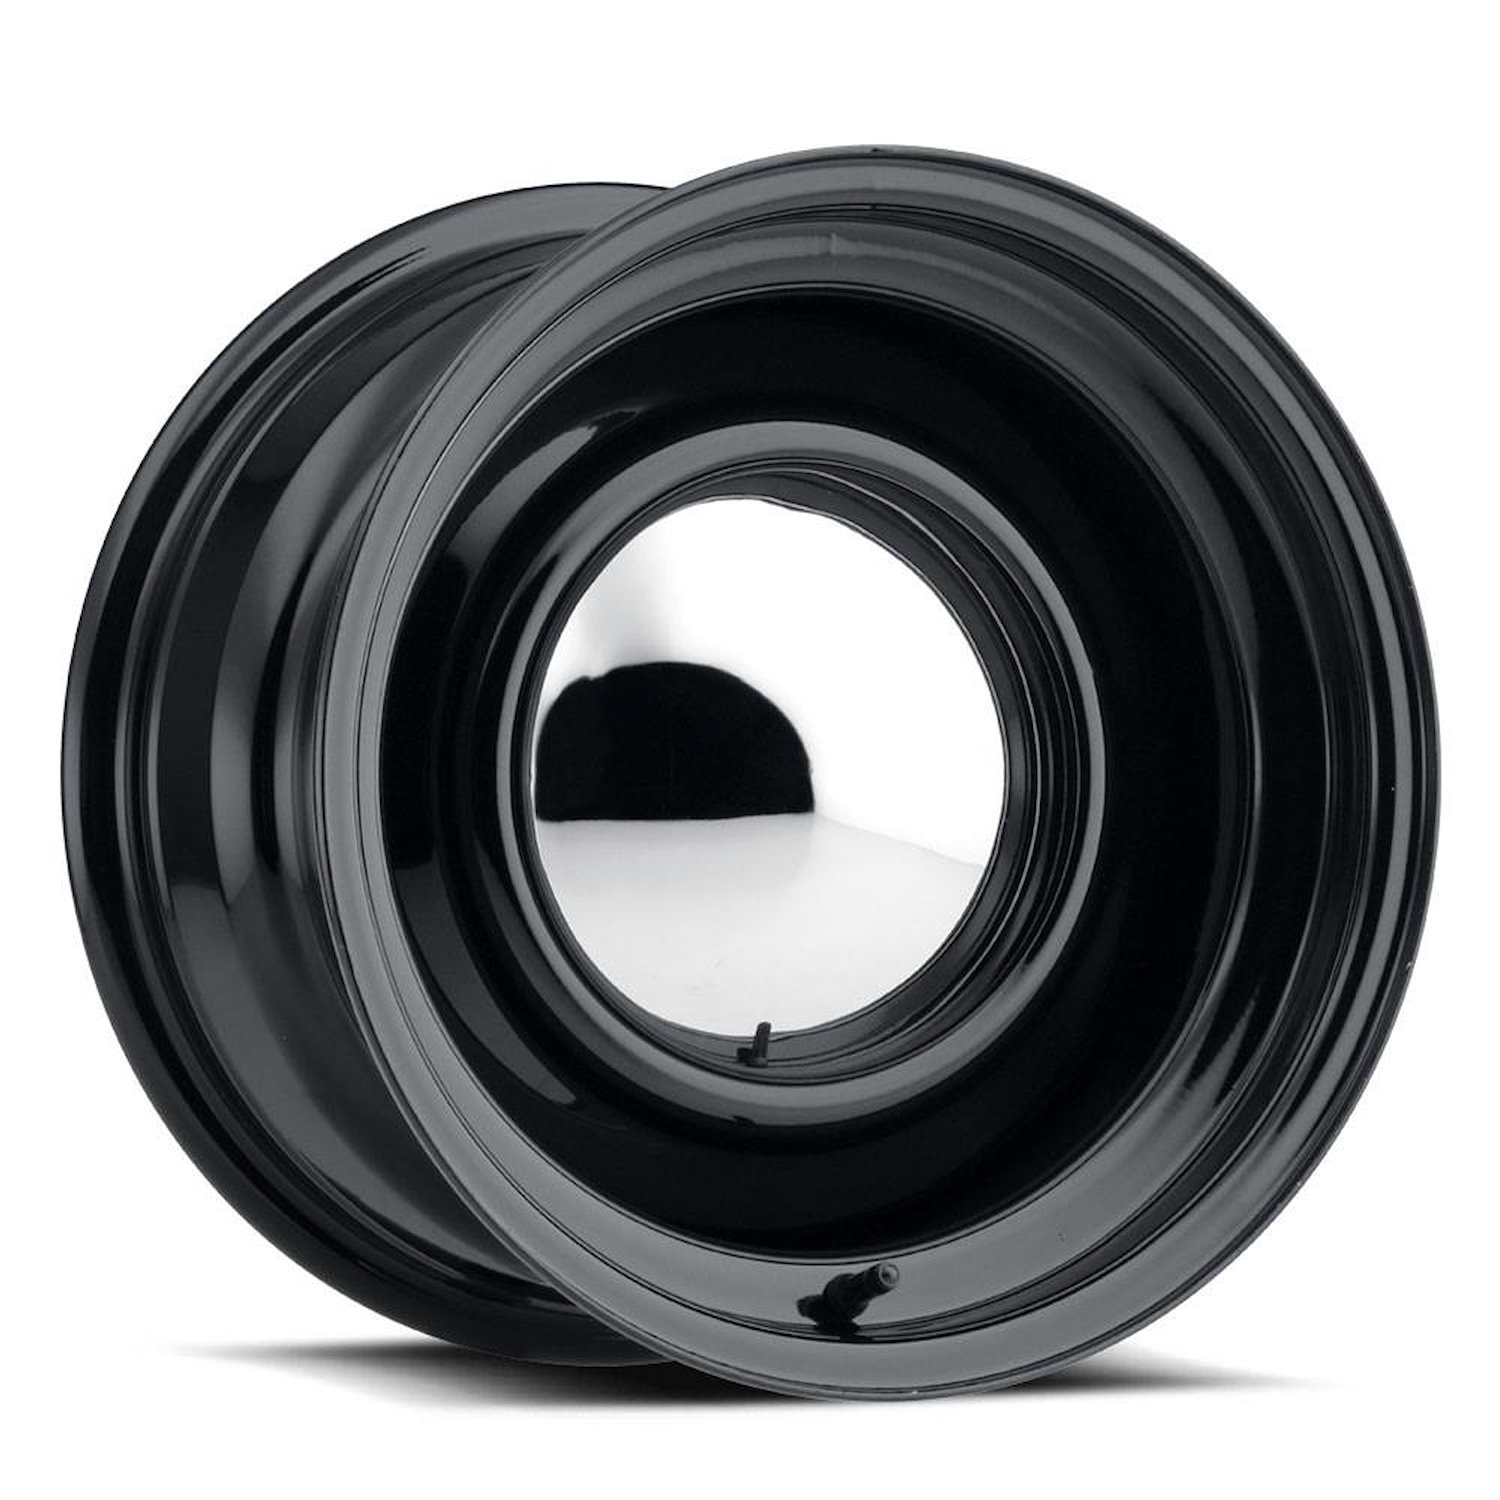 510-5860 510-Series Smoothie Wheel [Size: 15" x 8"] Gloss Black Finish